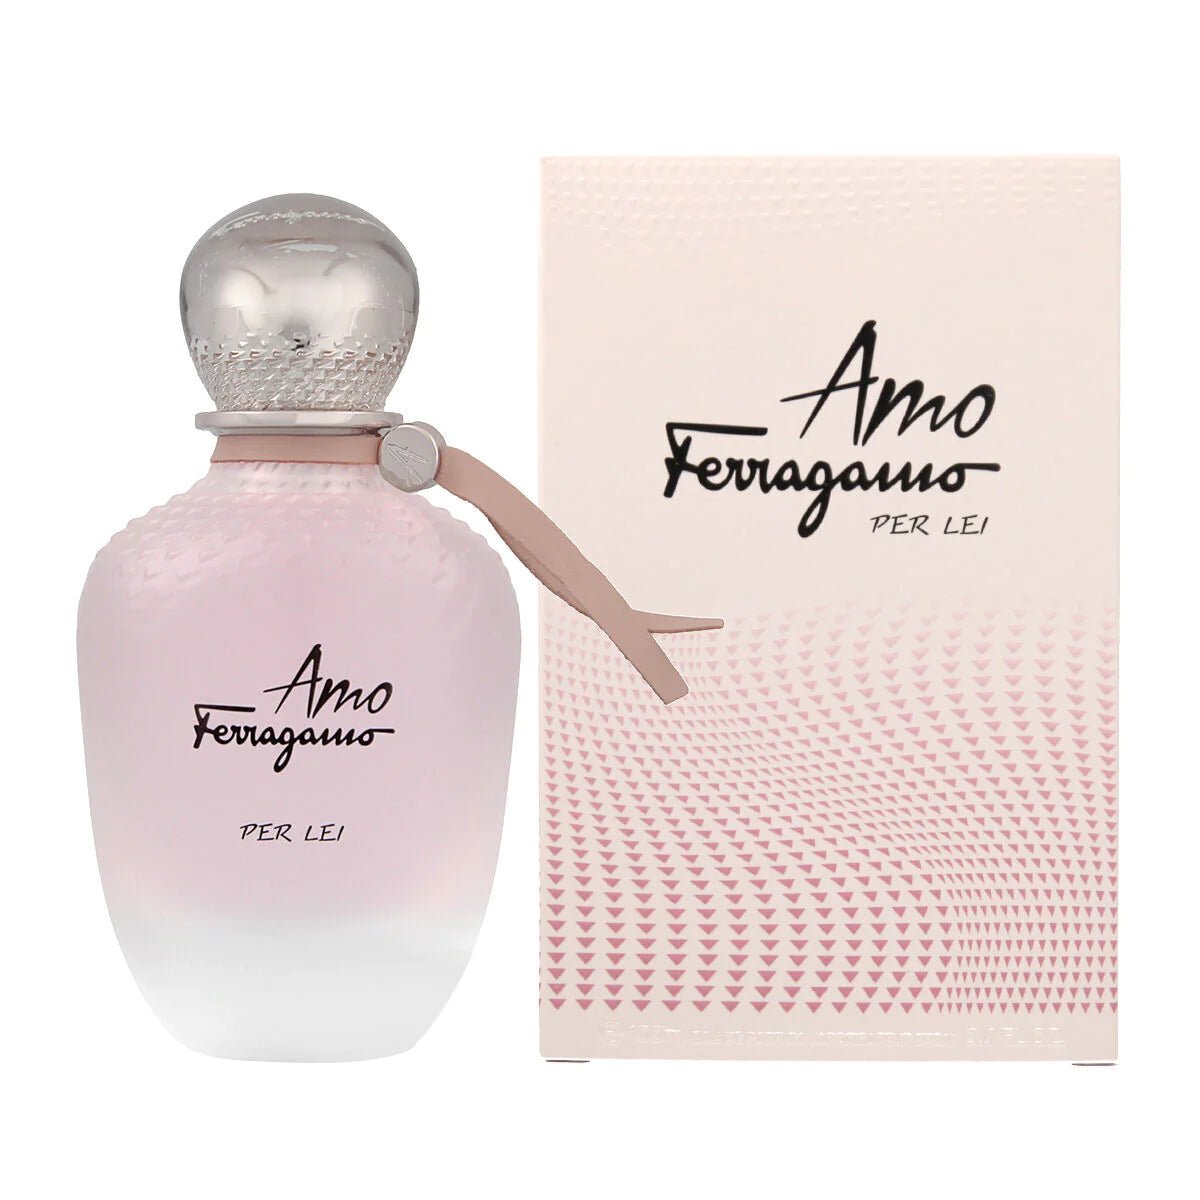 Salvatore Ferragamo Amo Ferragamo Flowerful Pearled Shower Gel | My Perfume Shop Australia